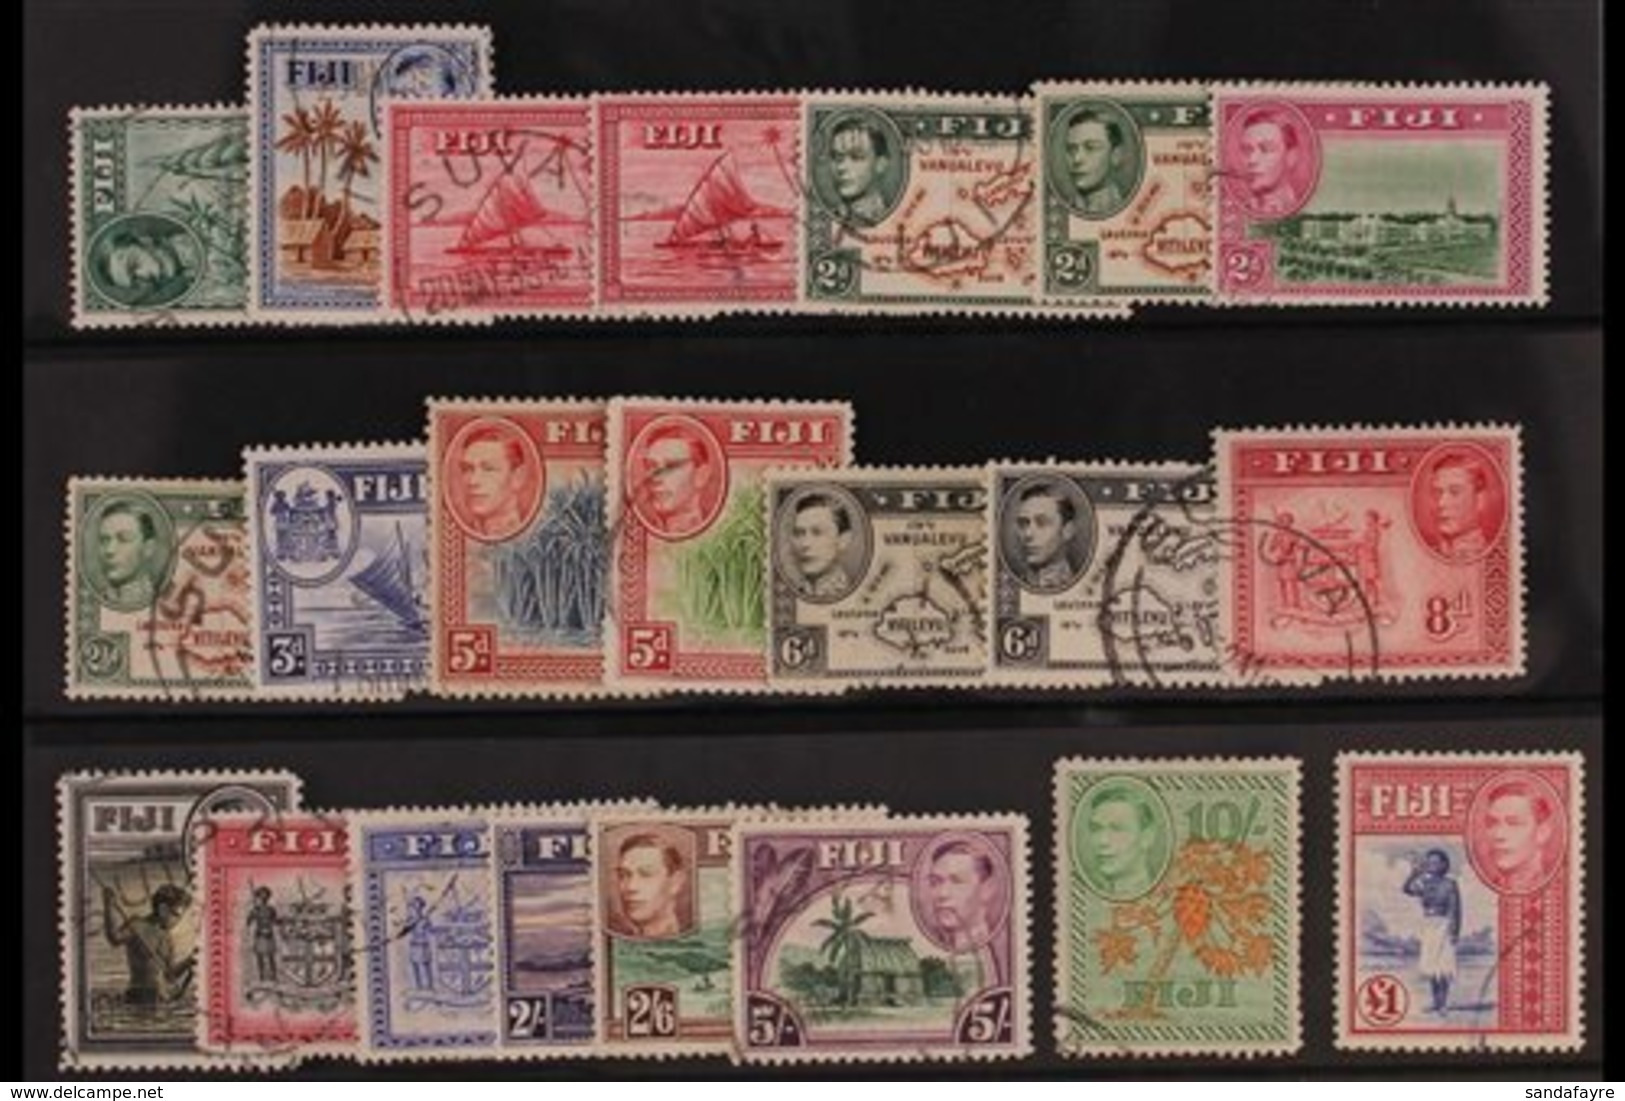 1938-55 Complete Basic King George VI Definitive Set, SG 249/266b, Fine Used. (22 Stamps) For More Images, Please Visit  - Fiji (...-1970)